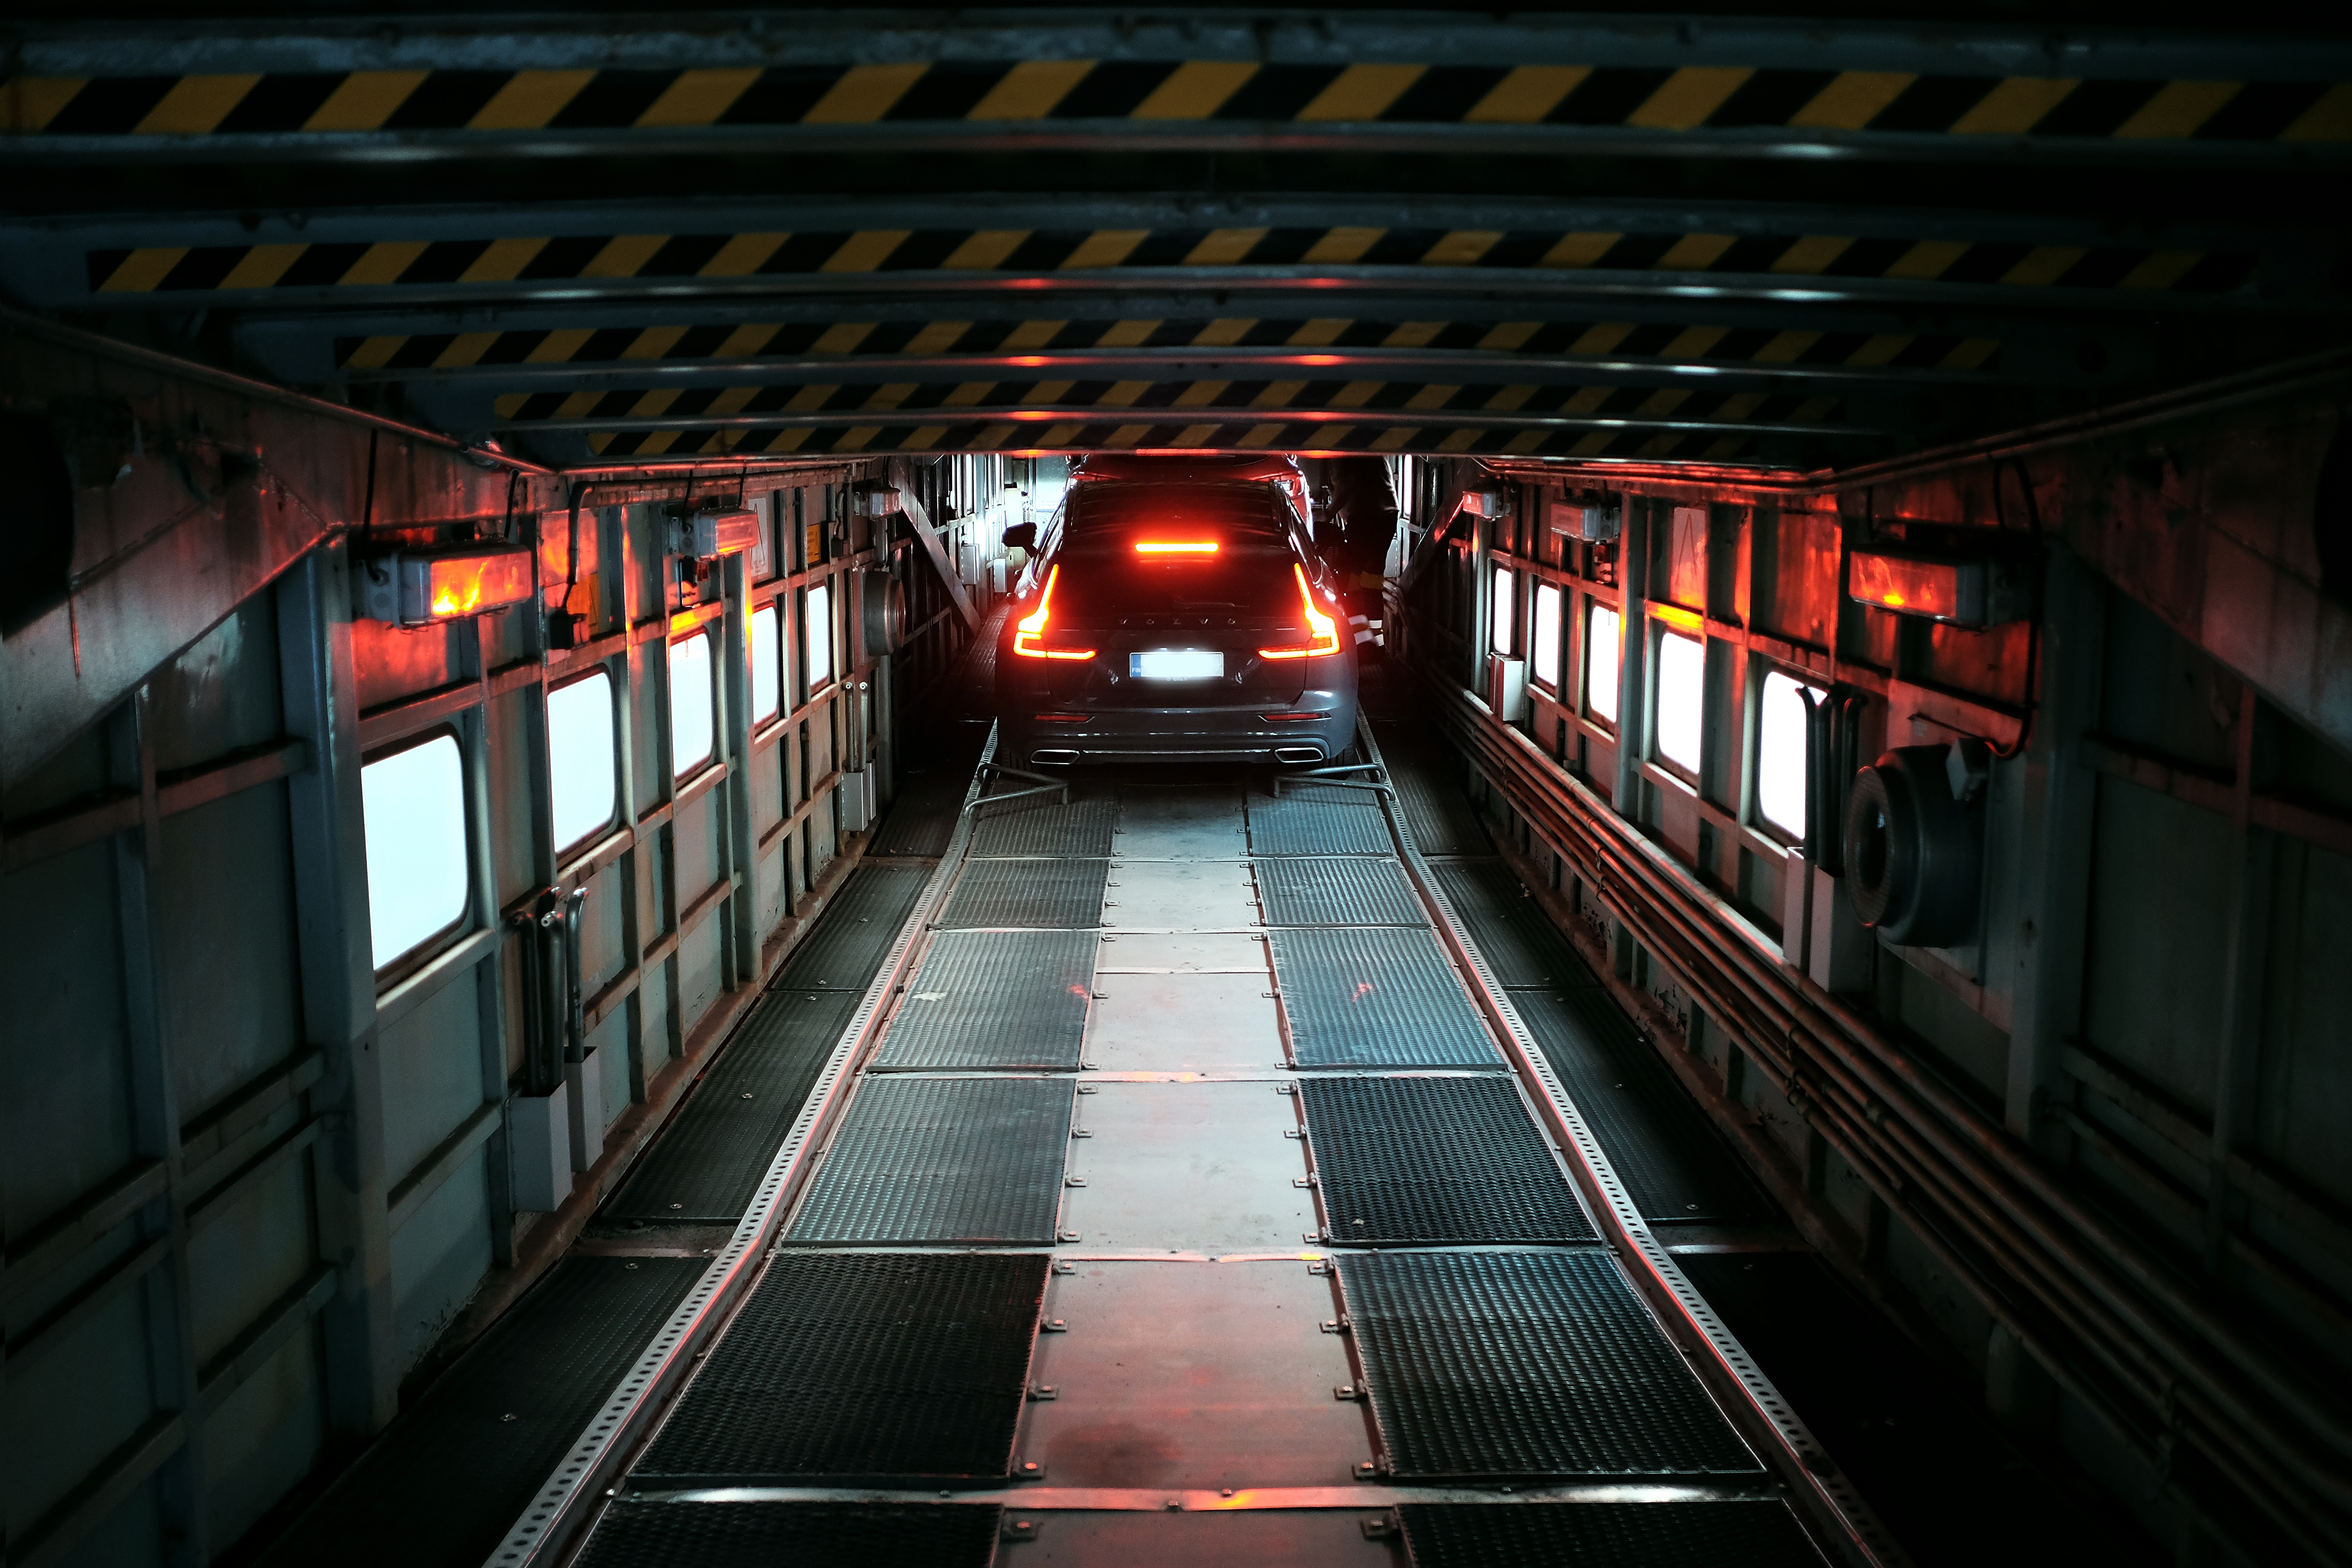 Loading a car onto the train - VR